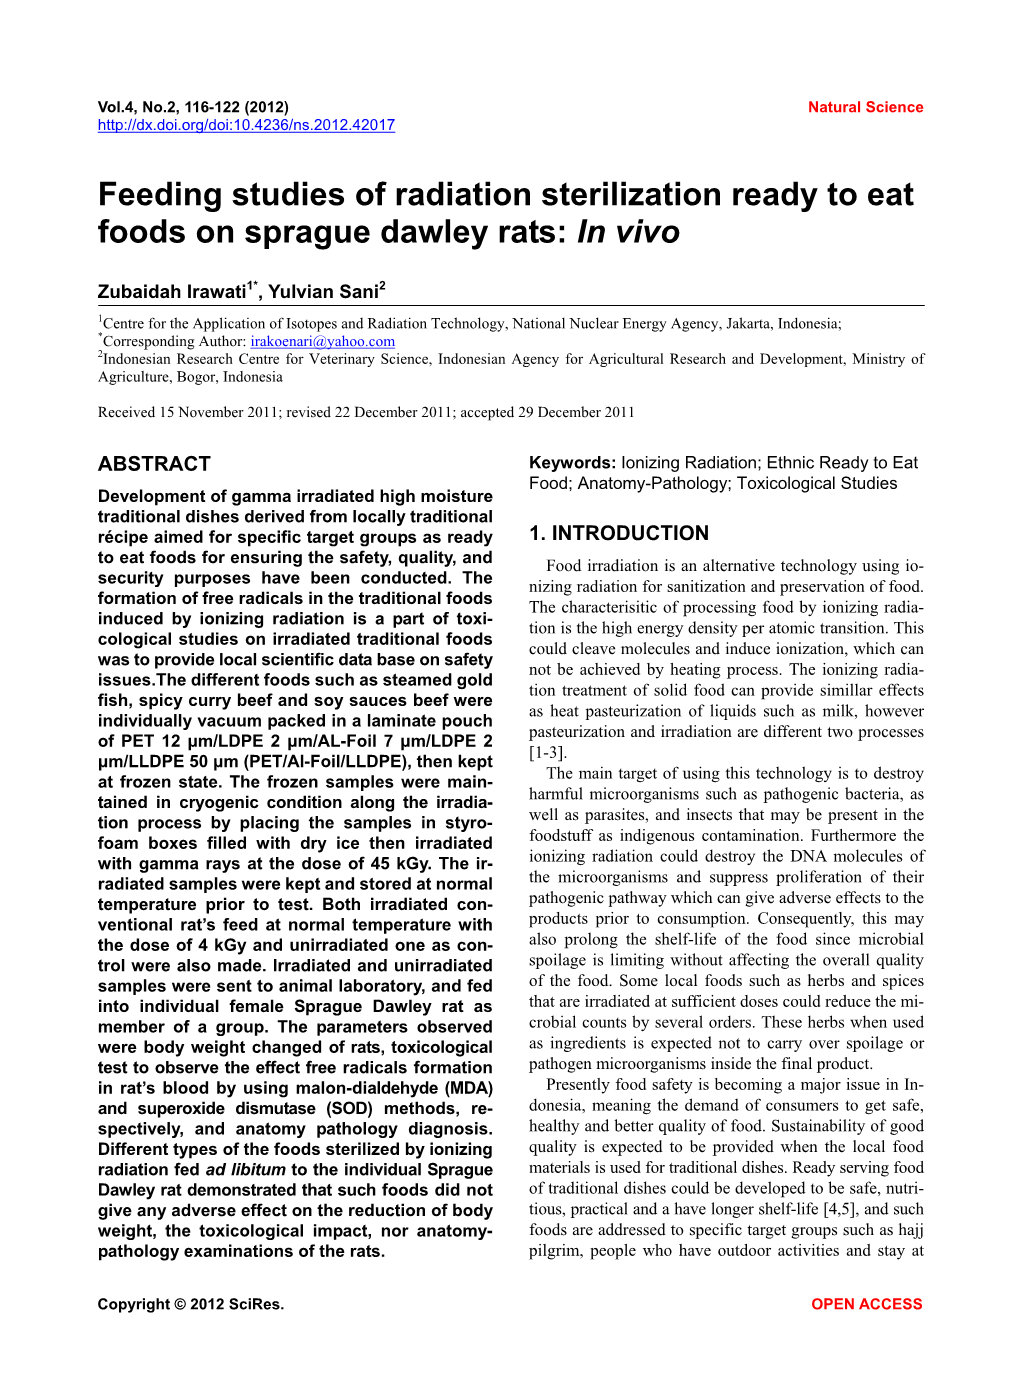 Feeding Studies of Radiation Sterilization Ready to Eat Foods on Sprague Dawley Rats: in Vivo